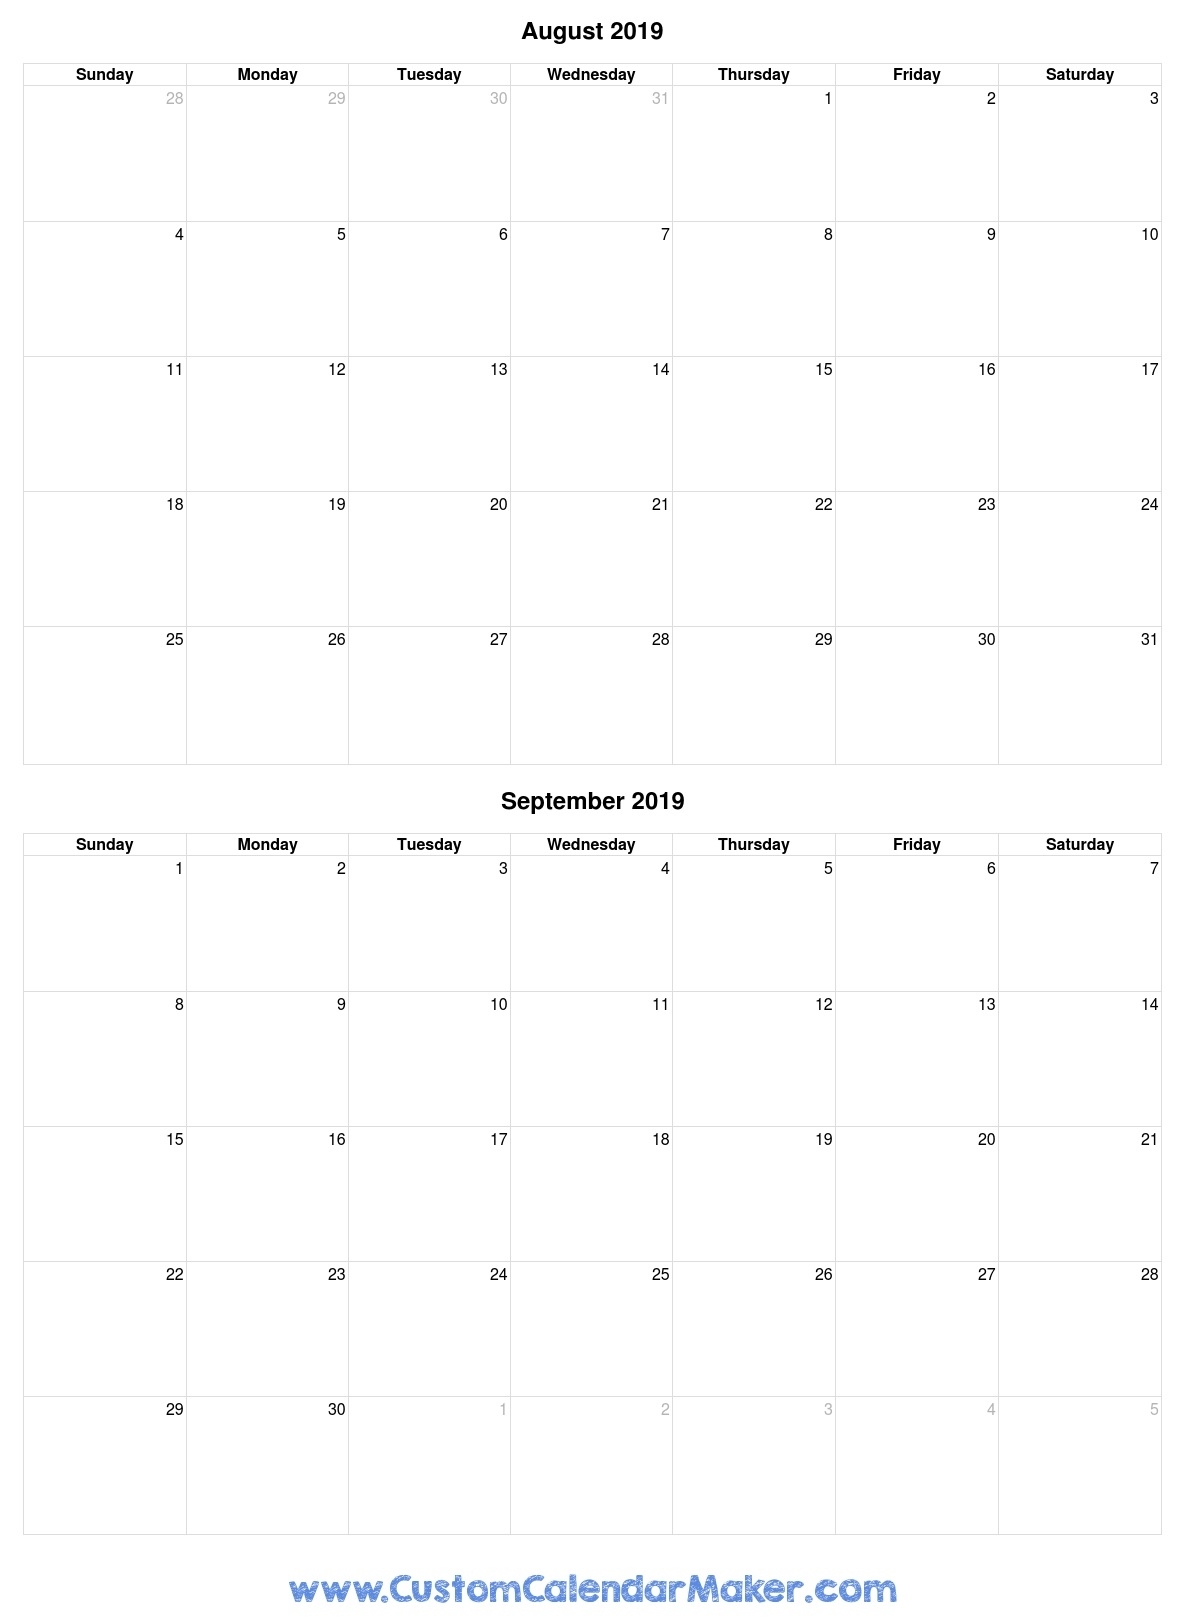 August And September 2019 Free Printable Calendar intended for August And September Calendar Printable